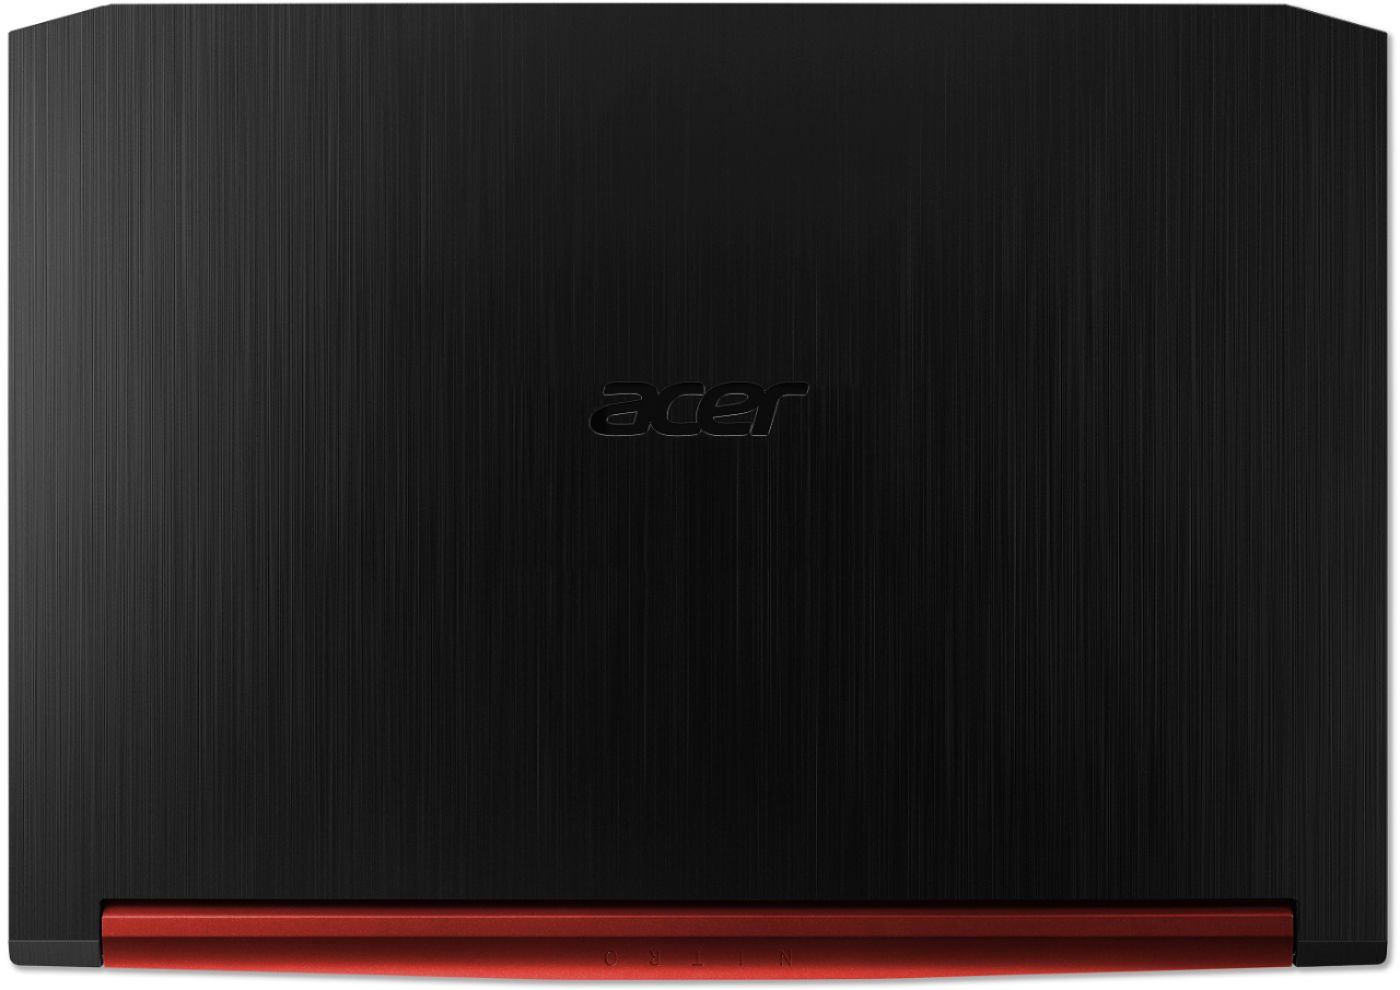 Acer - Nitro 5 17.3 Gaming Laptop - Intel Core i5 - 8GB Memory - NVIDIA  GeForce GTX 1650 Ti 4GB - 512GB SSD - FHD IPS Display - Obsidian Black